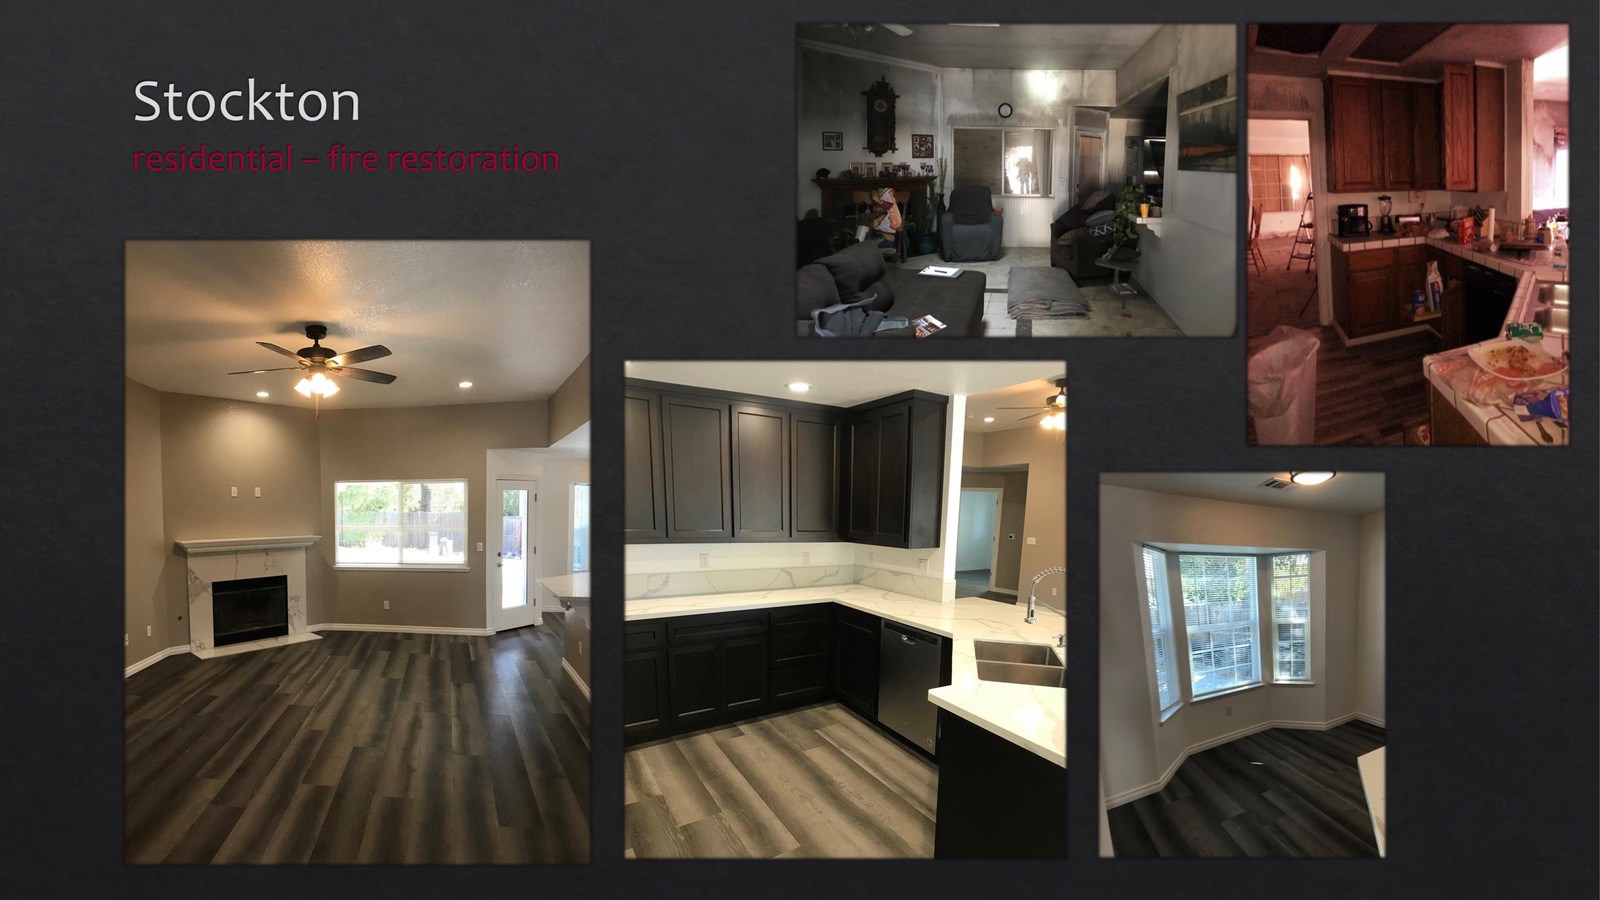 Stockton Residential fire restoration - kitchen + living room